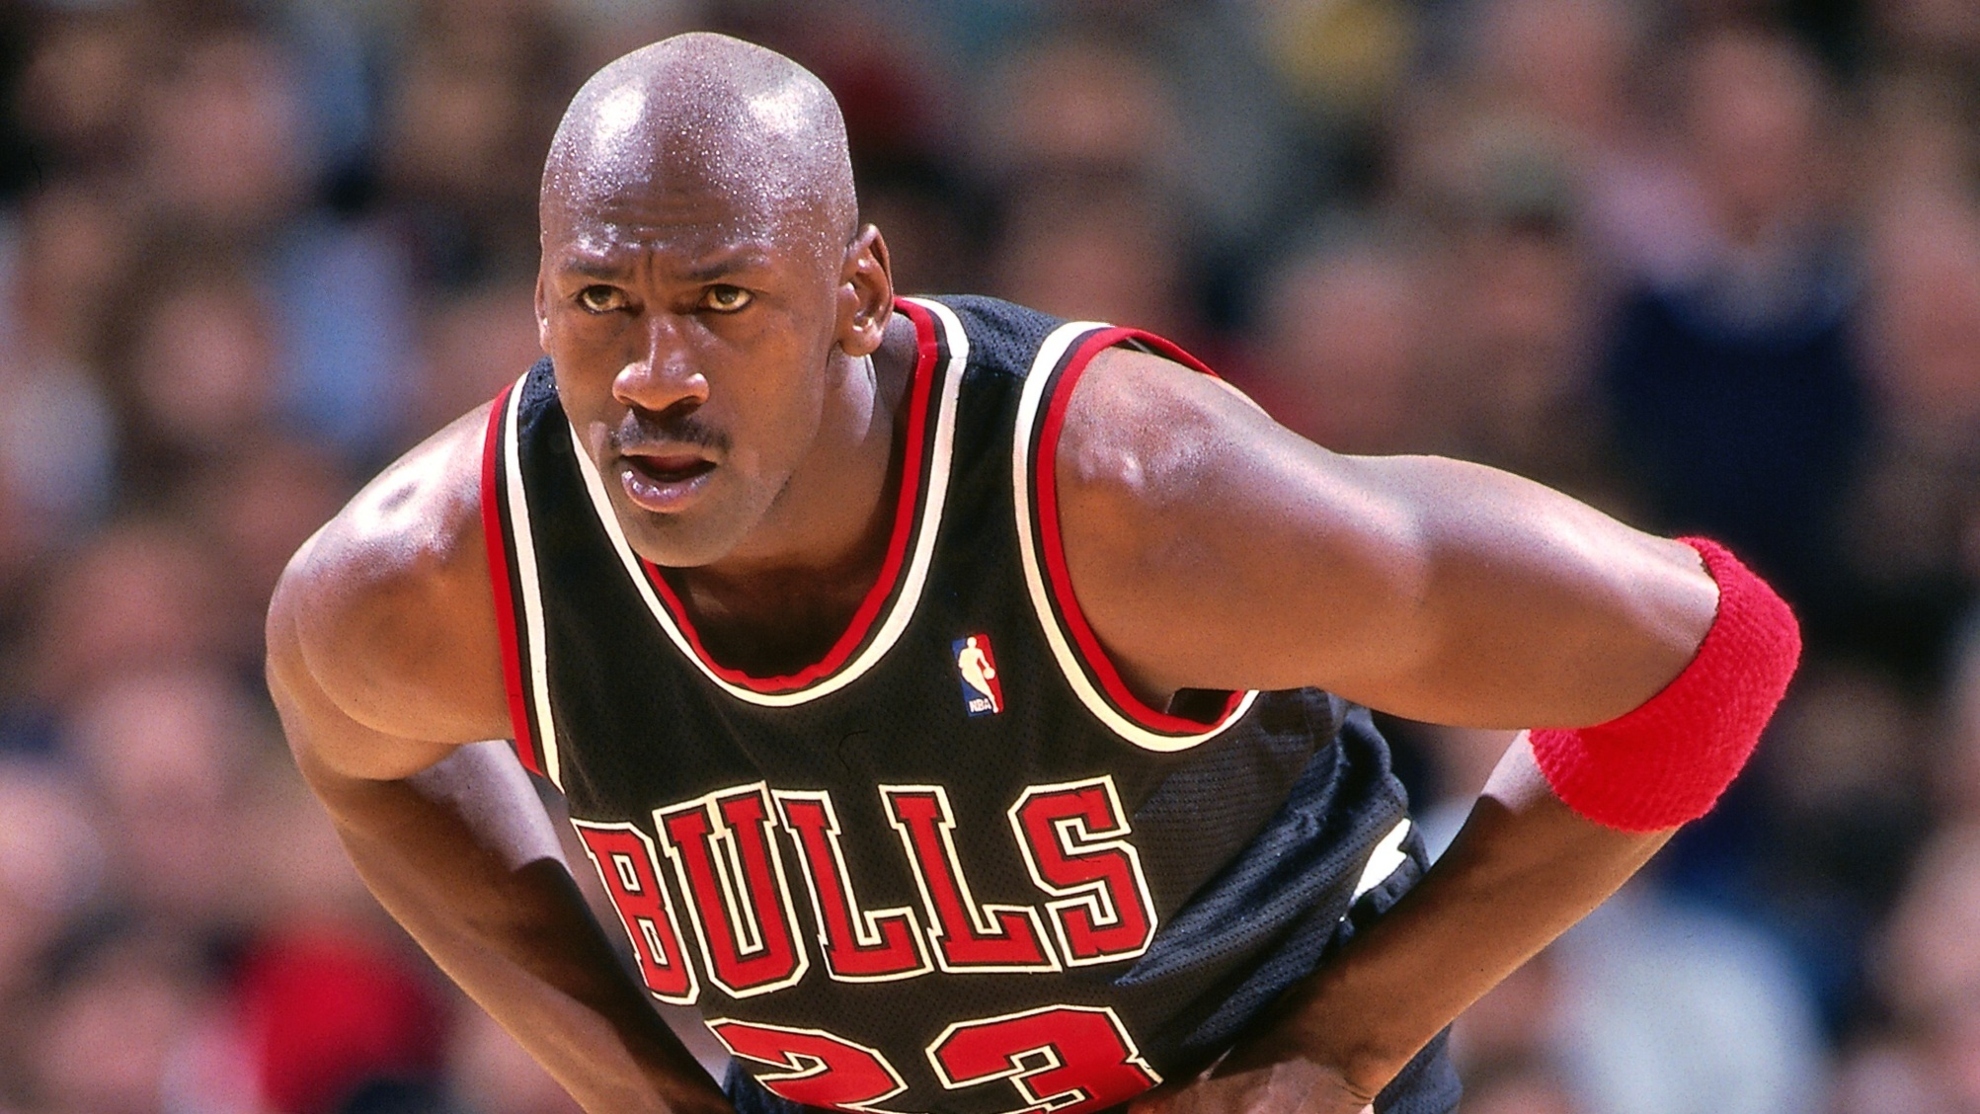 Michael Jordan Net Worth 2023 - The Basketball Legend's Financial Empire